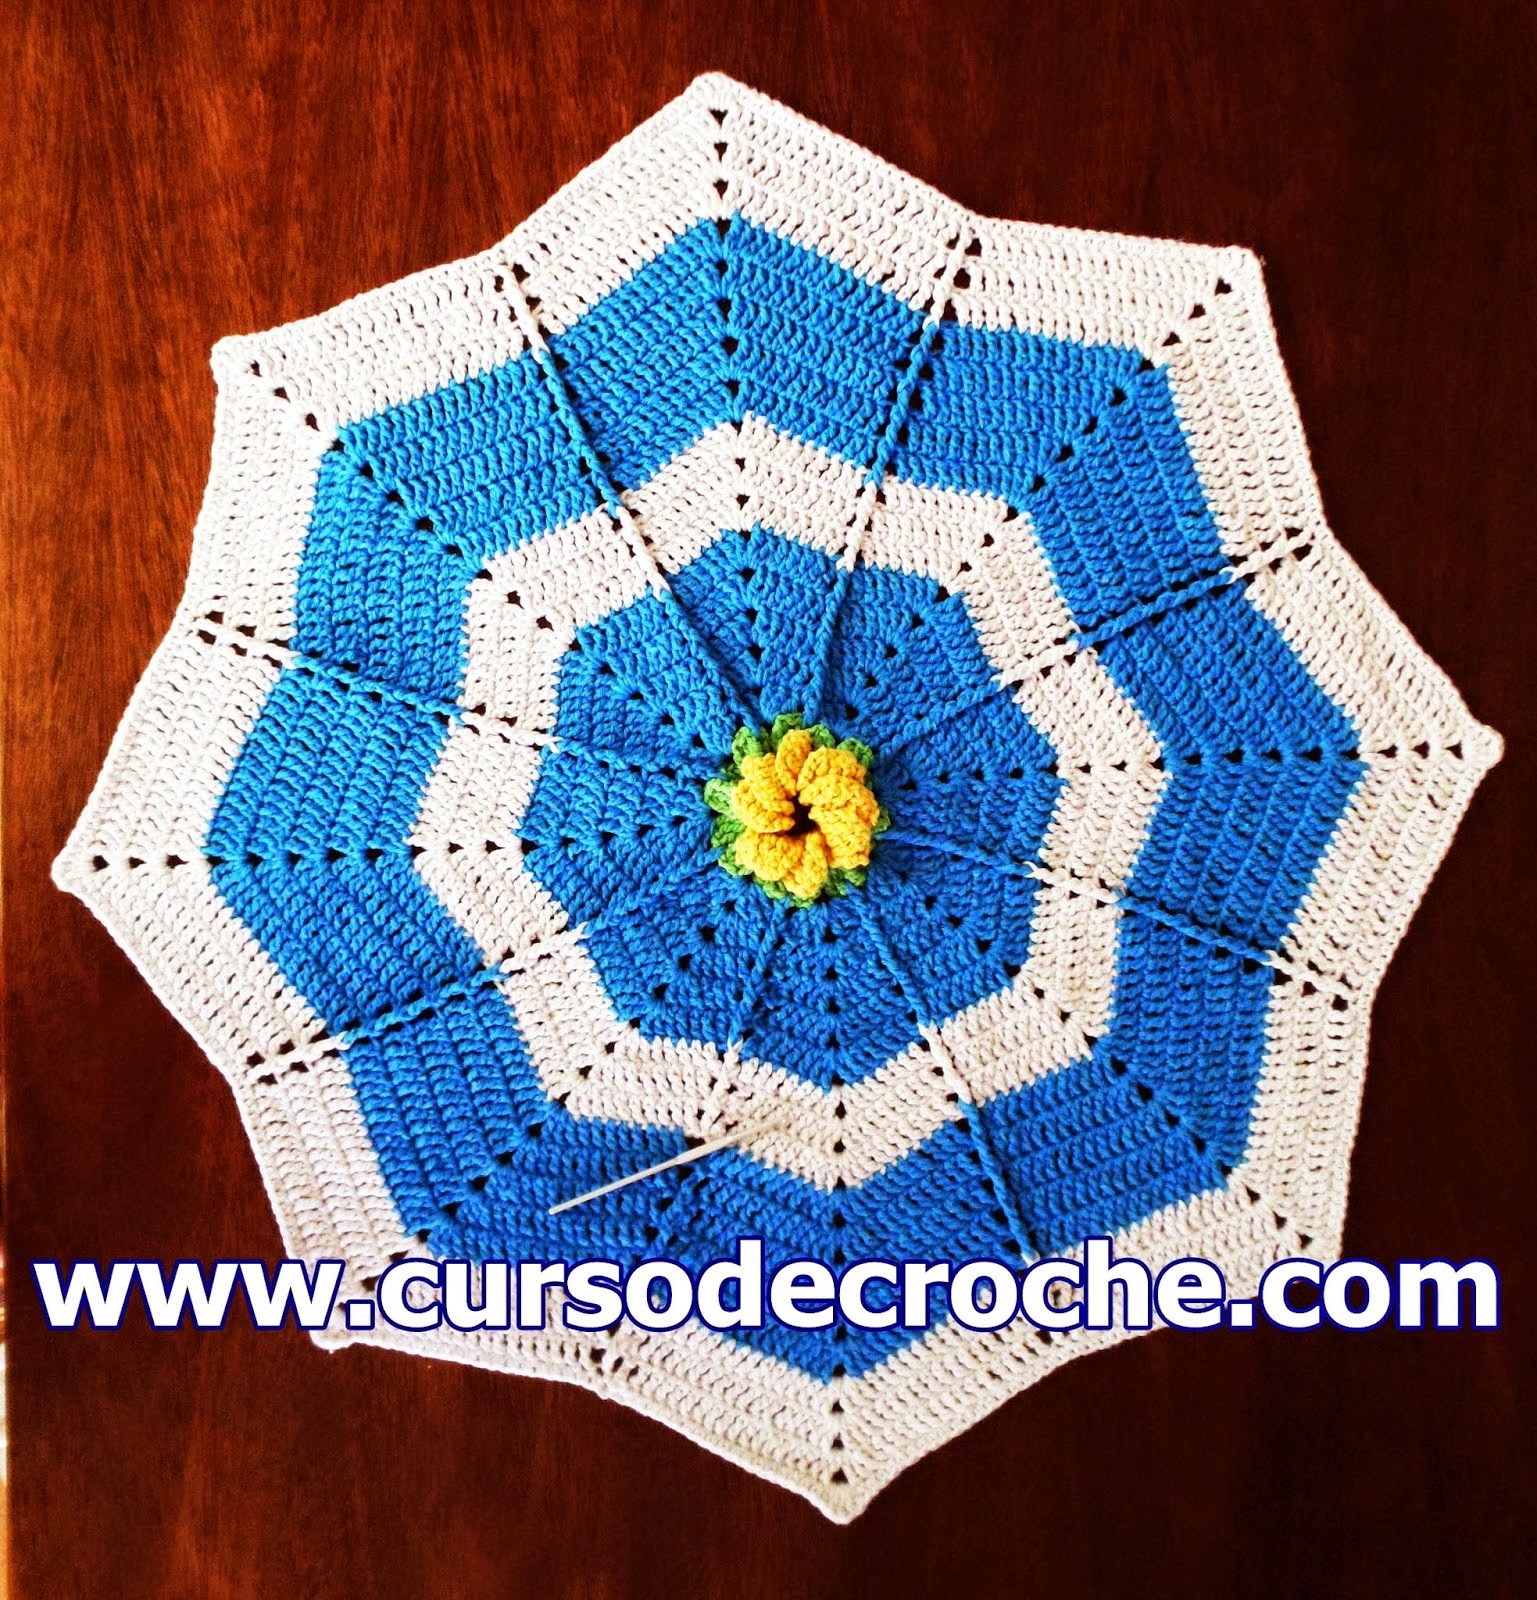 aprender croche tapetes estrela floral branco azul amarelo edinir-croche dvd video aulas loja curso de croche frete gratis